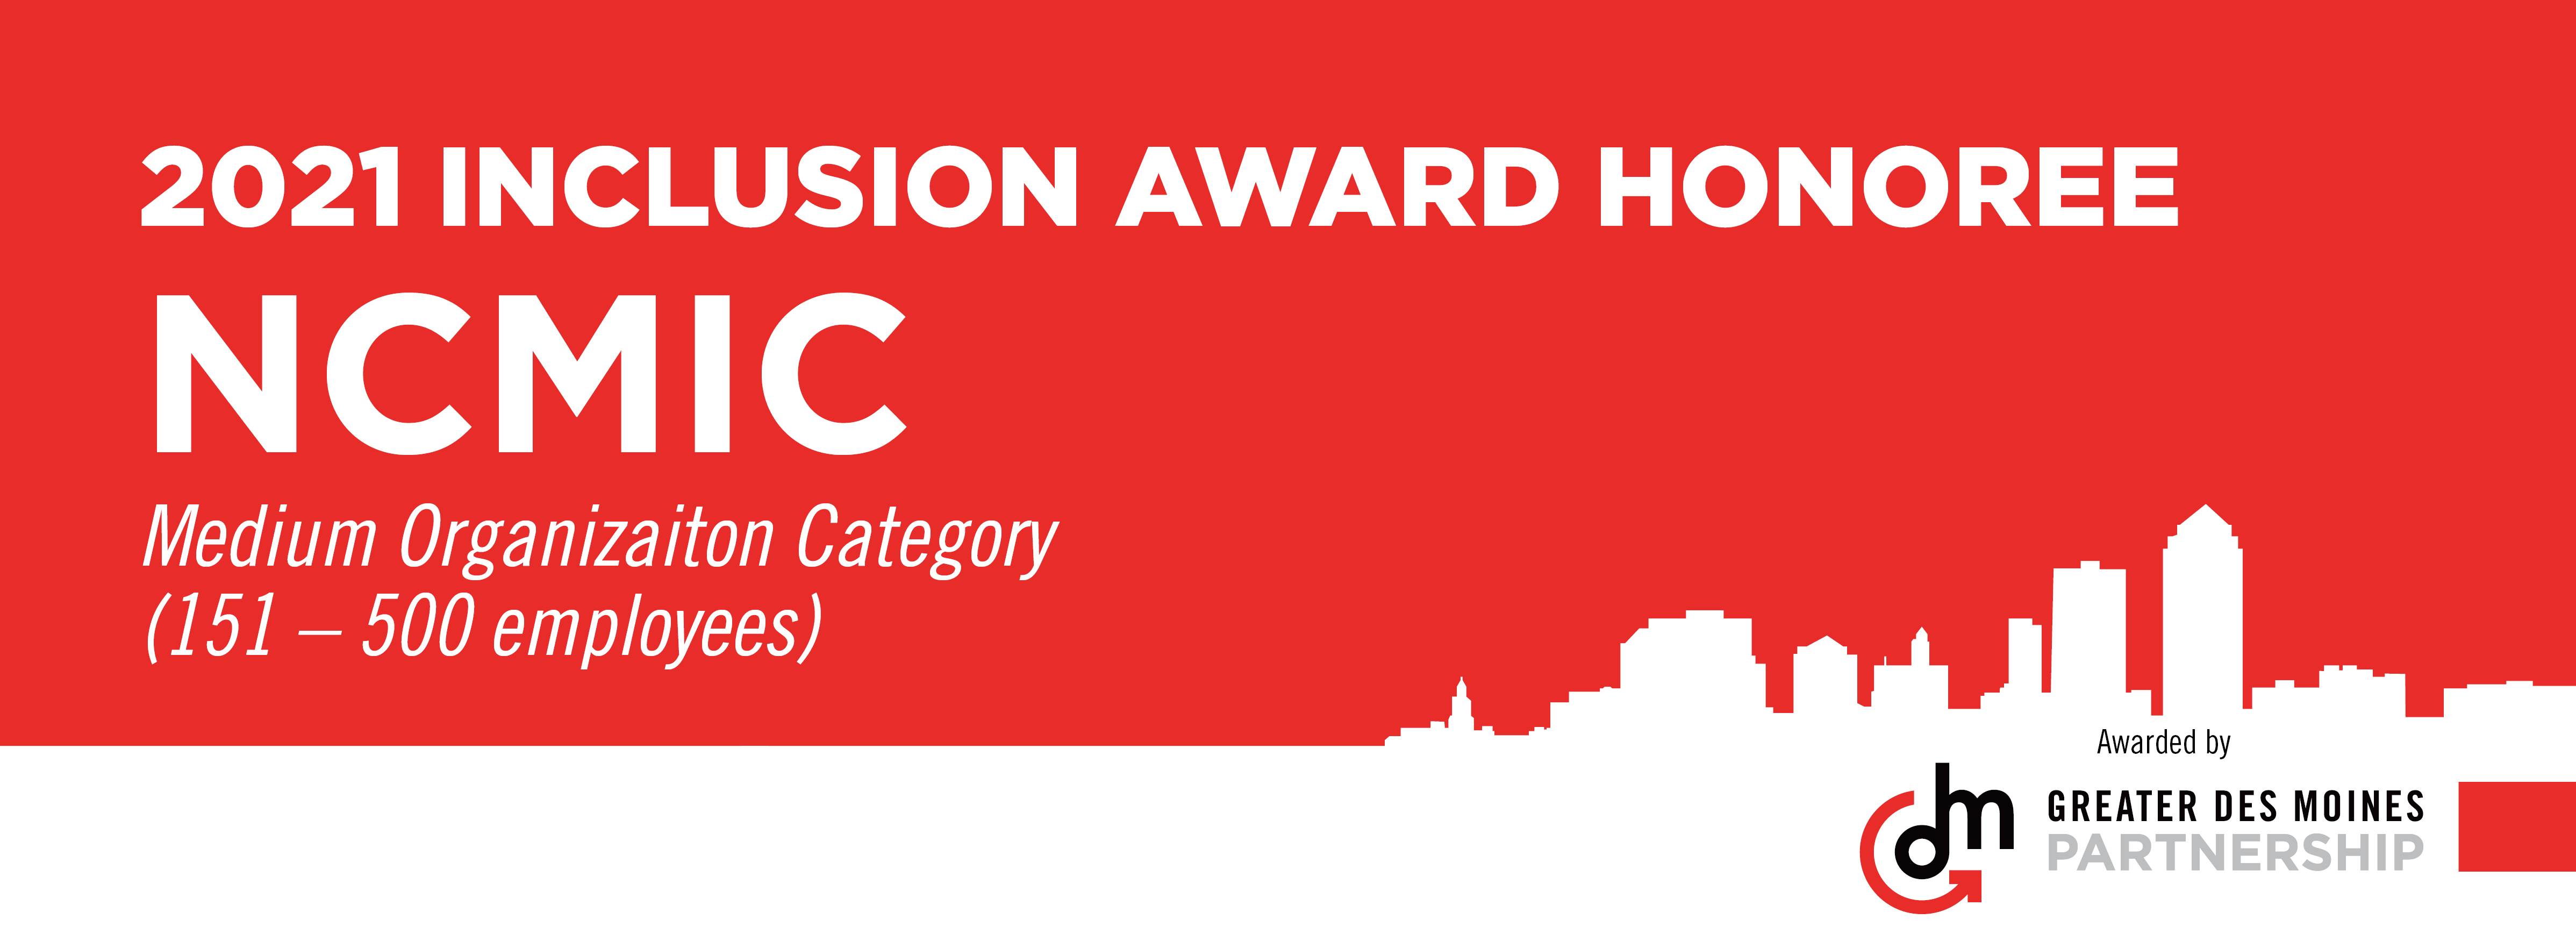 NCMIC Inclusion Award